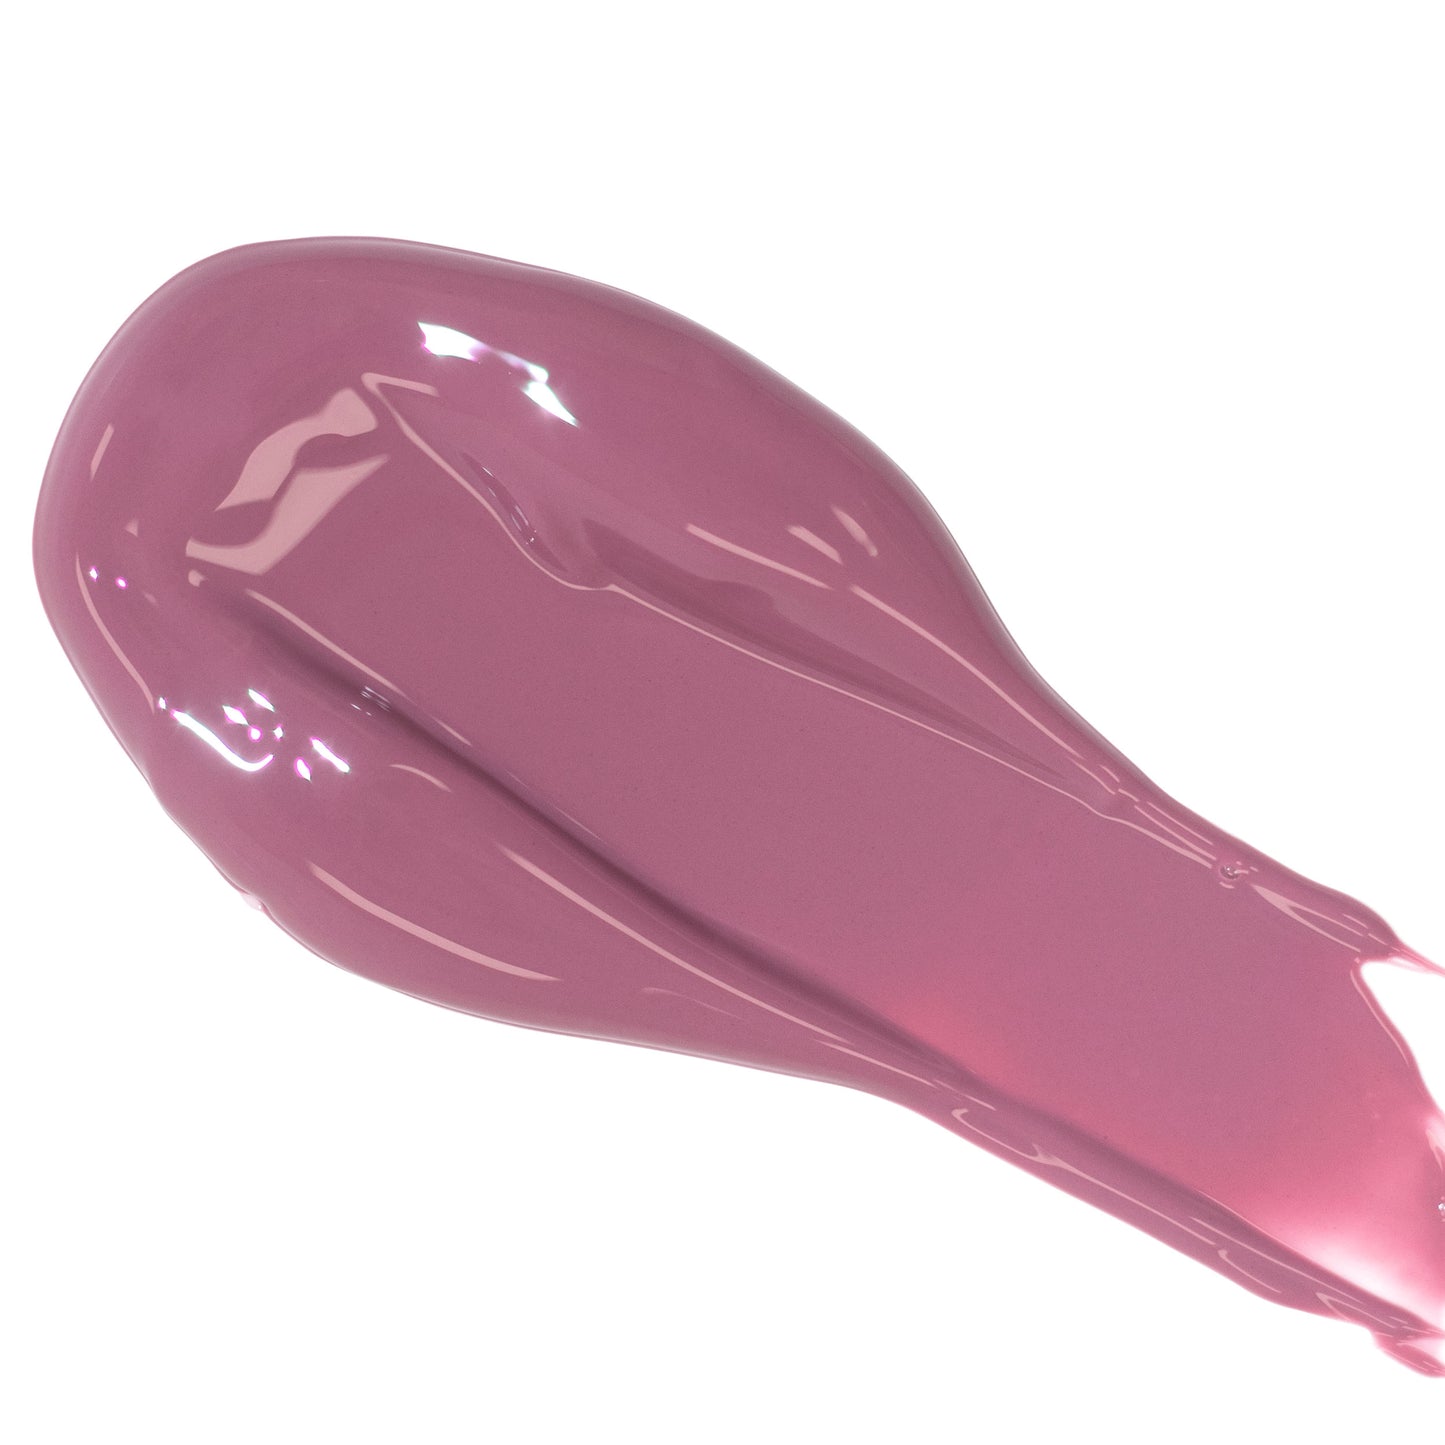 
                  
                    FitGlow Lip Serum - Joy - Creamy Rosy Mauve colour applied as a shiny smear of lip serum on a white background
                  
                